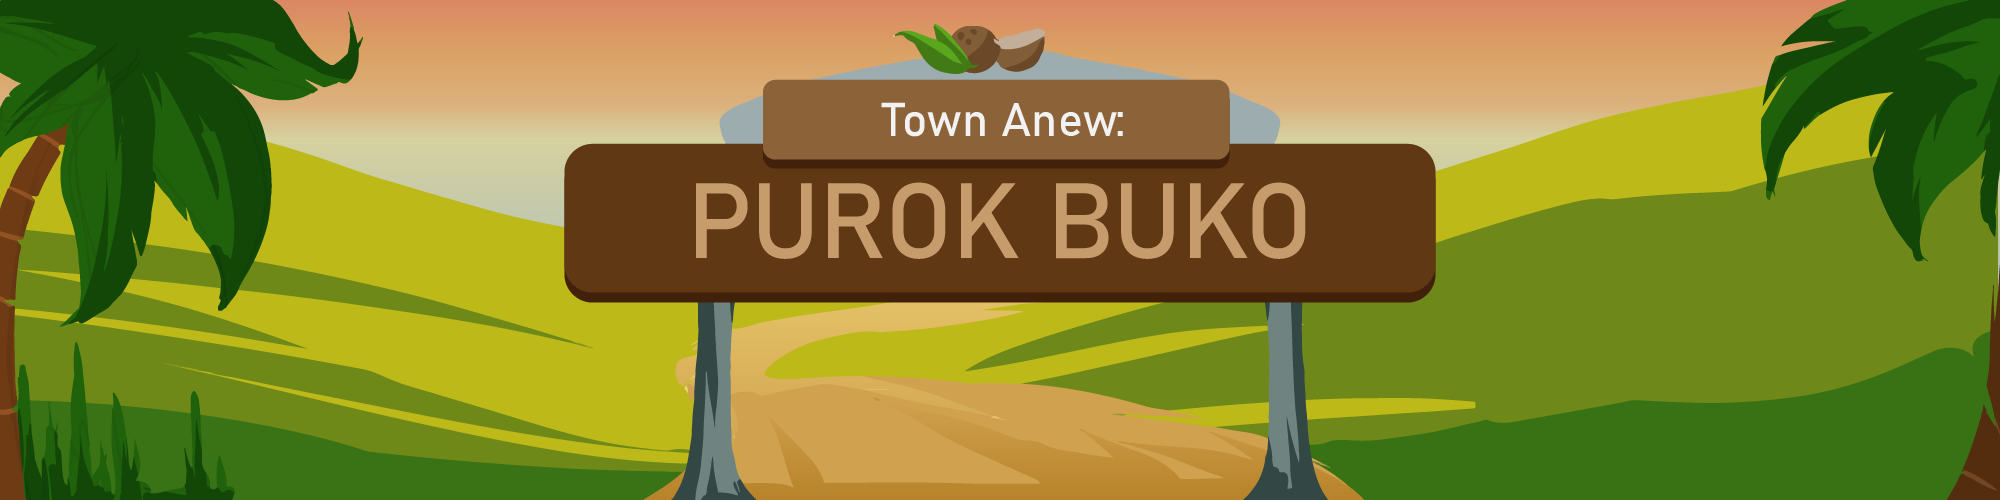 Town Anew - Purok Buko